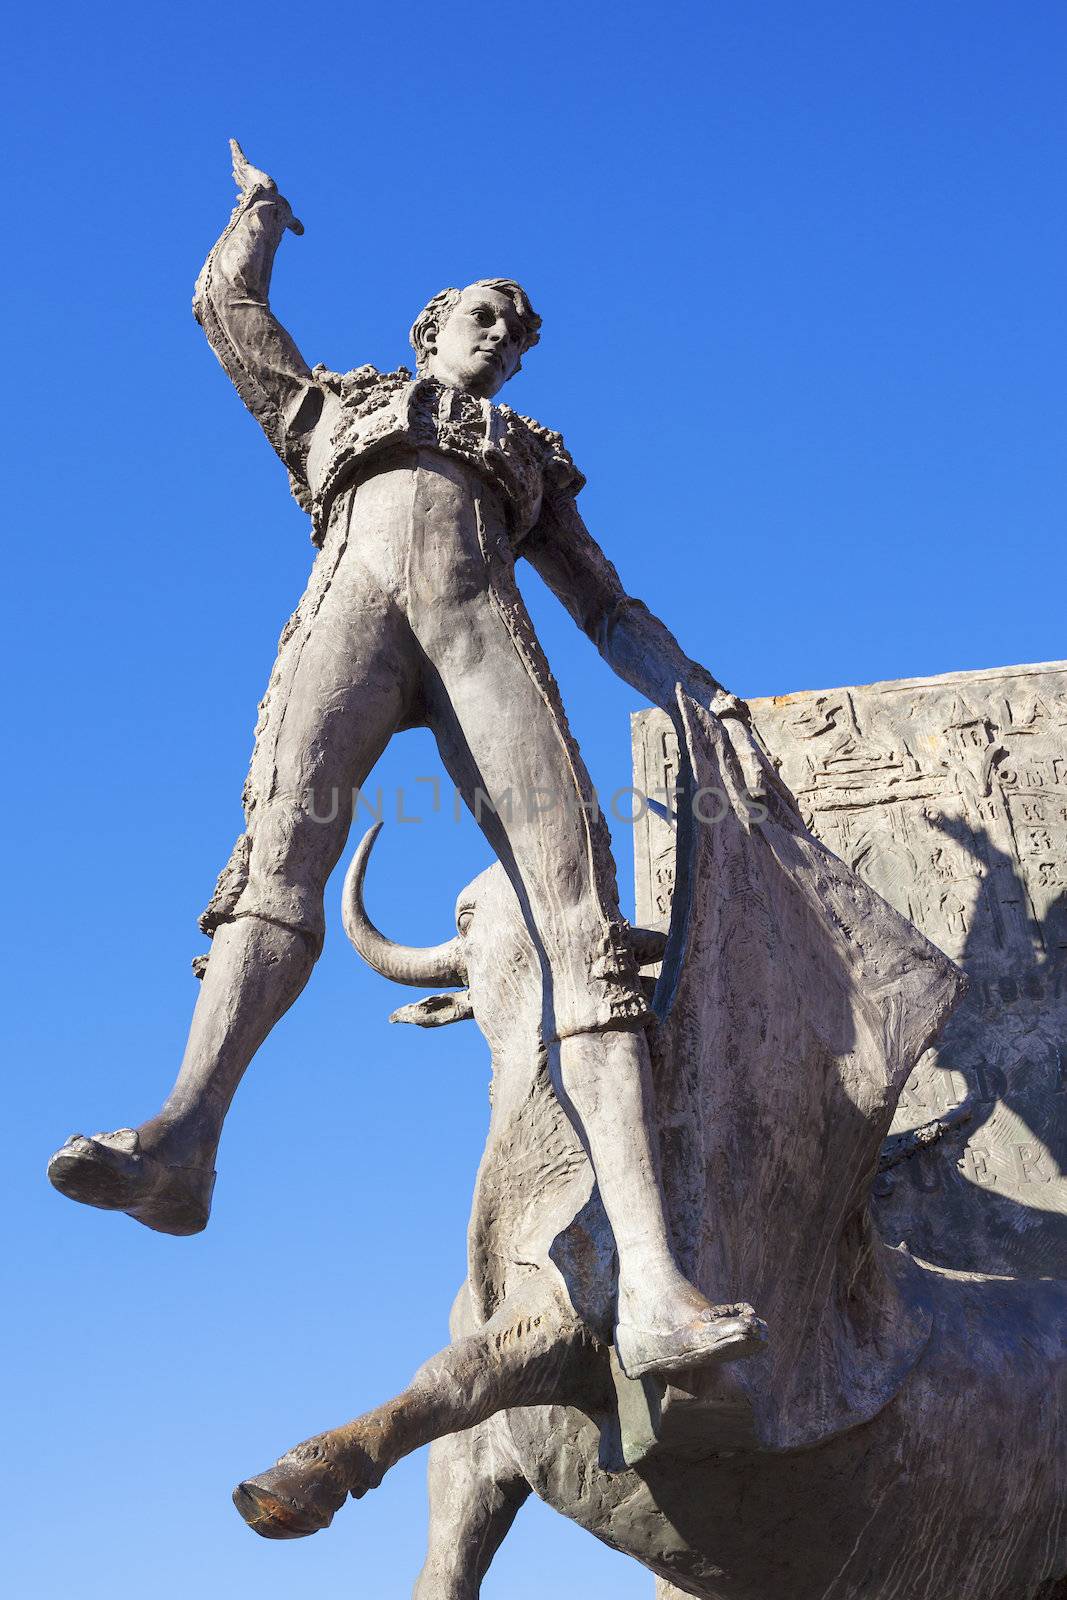 Bullfighter sculpture by vwalakte